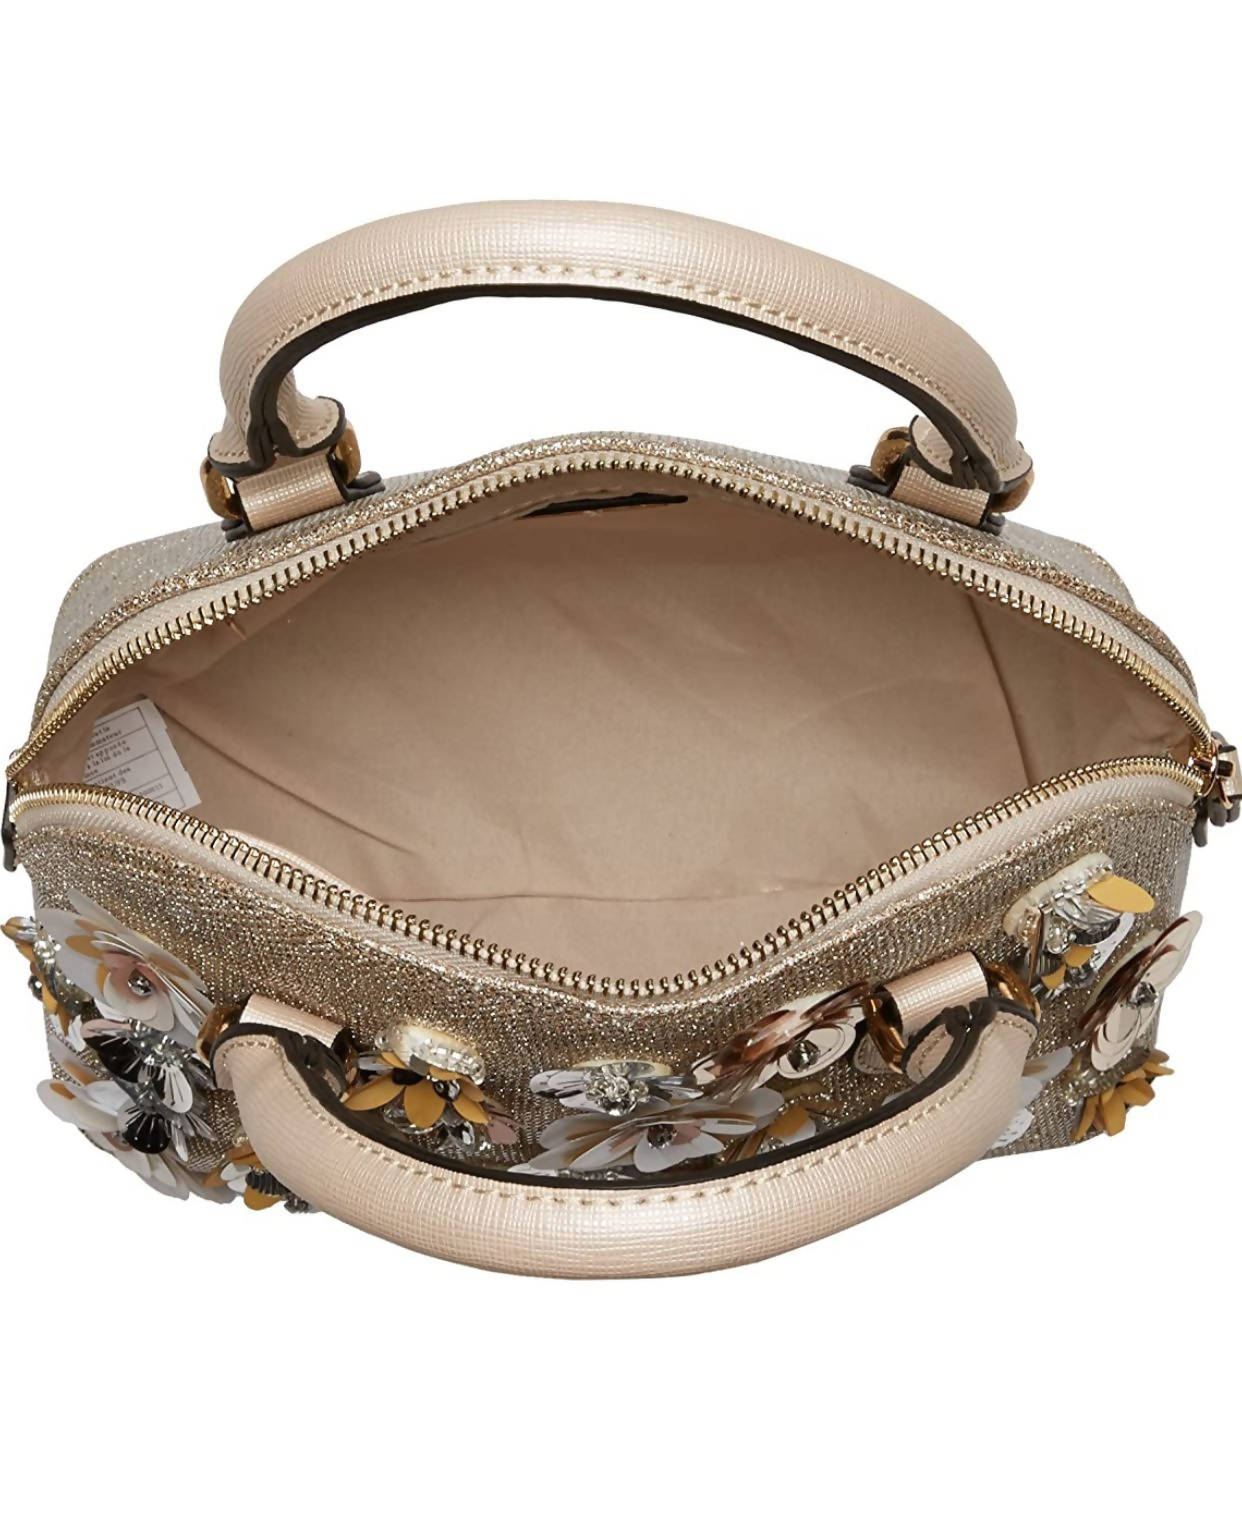 ALDO METALLIC GOLD Womens Satchel Bag